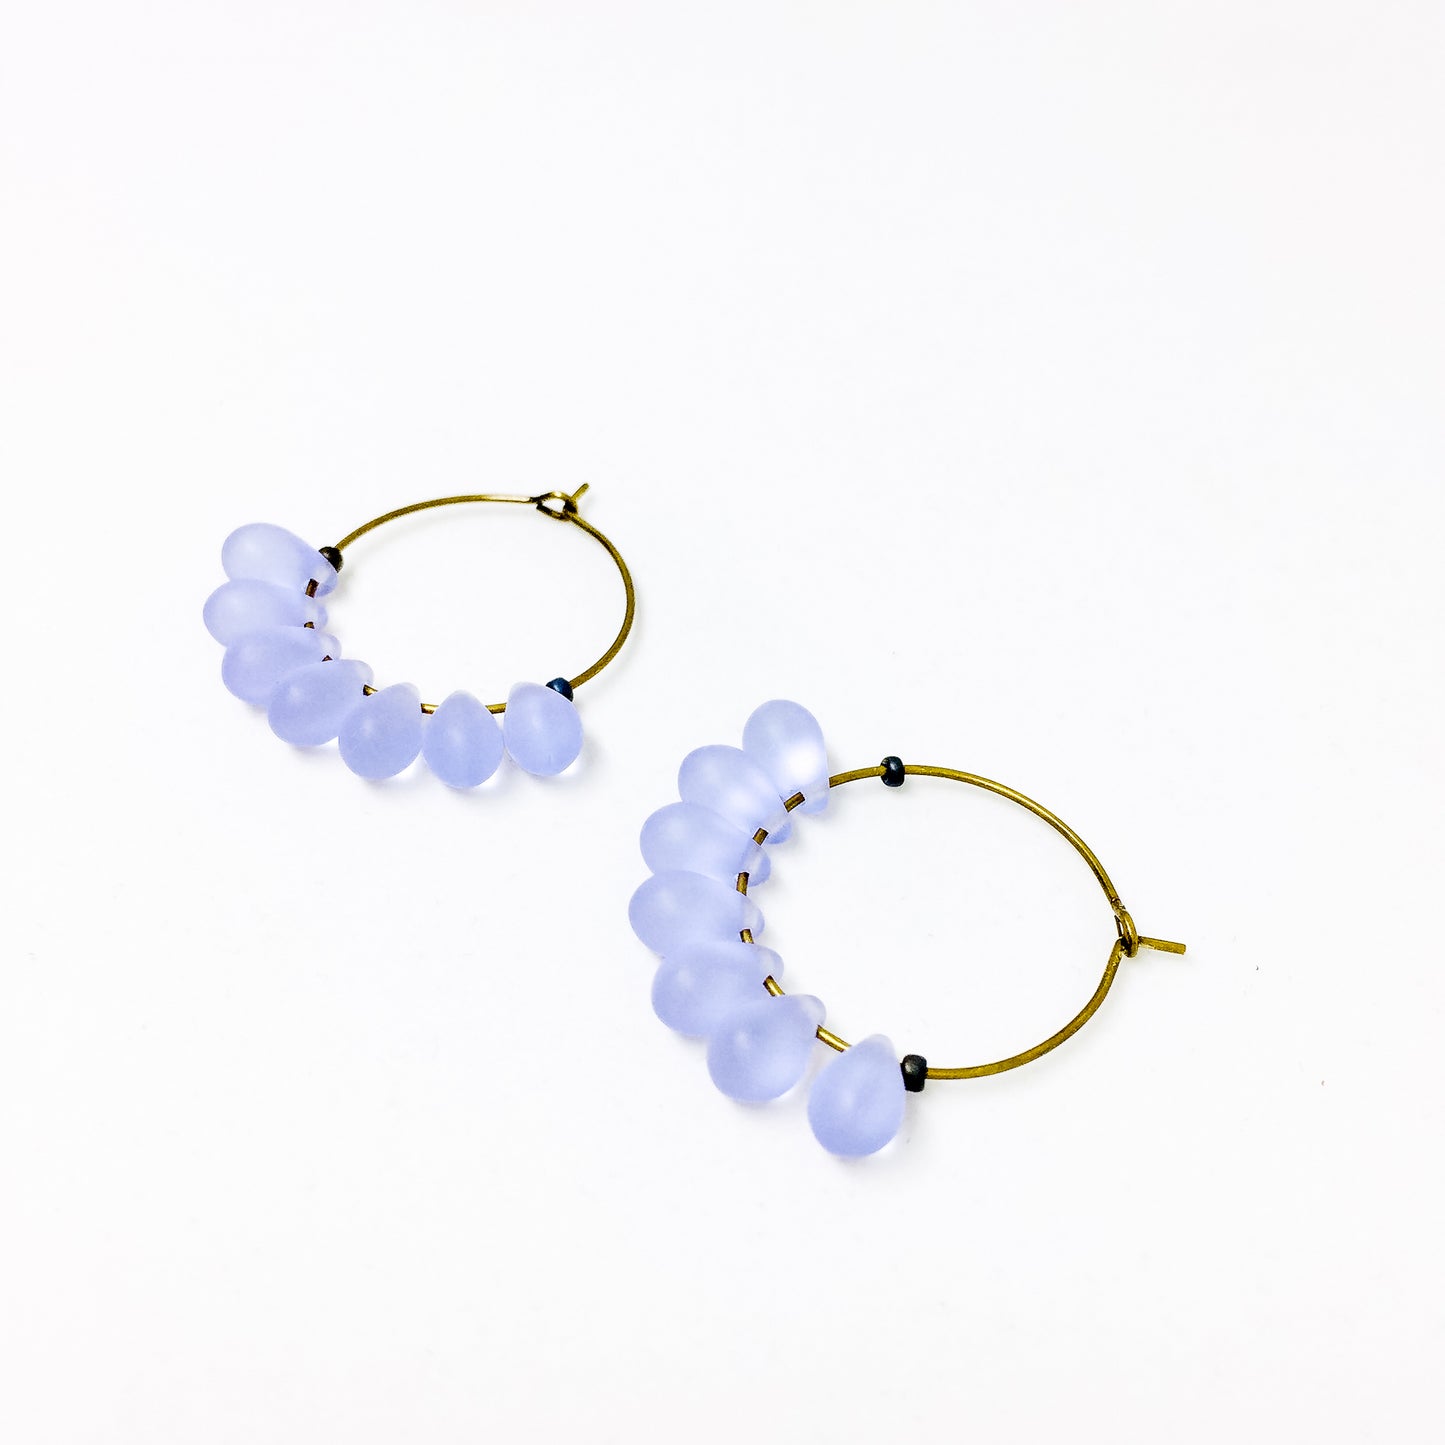 Dewdrop beaded glass hoop earrings in lilac